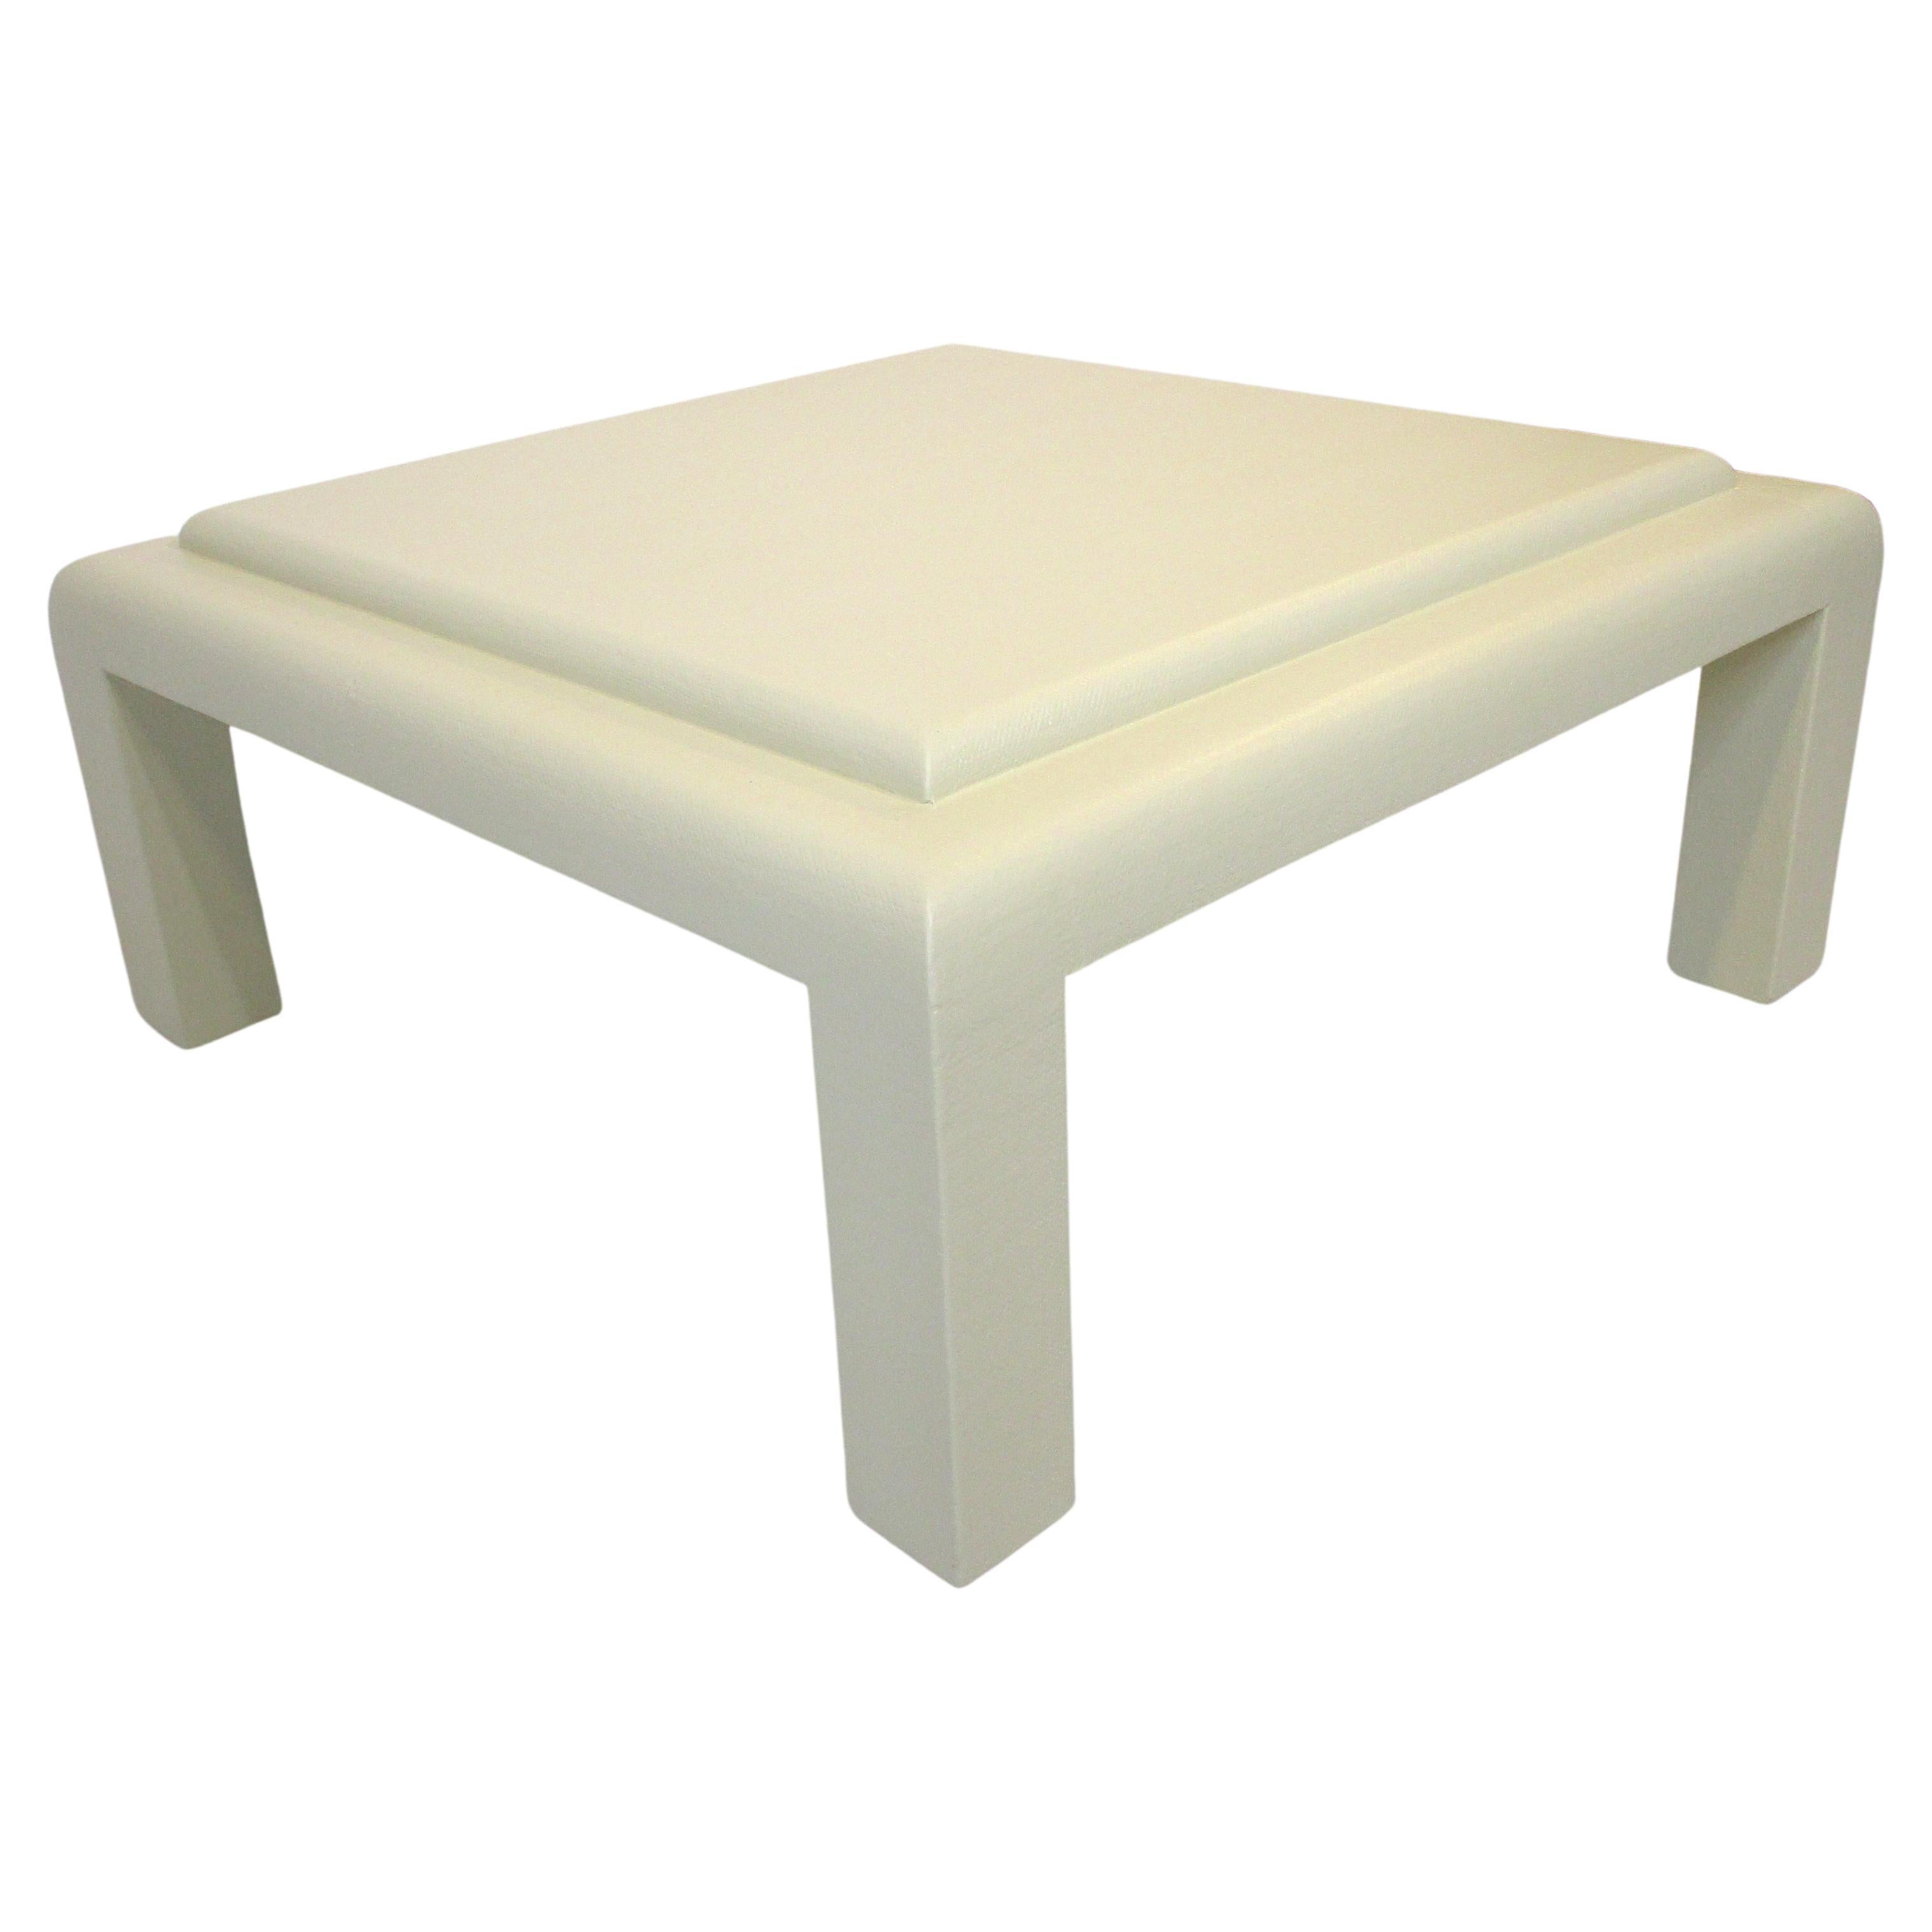 Table basse en tissu/lin en forme de gazon dans le style de Karl Springer